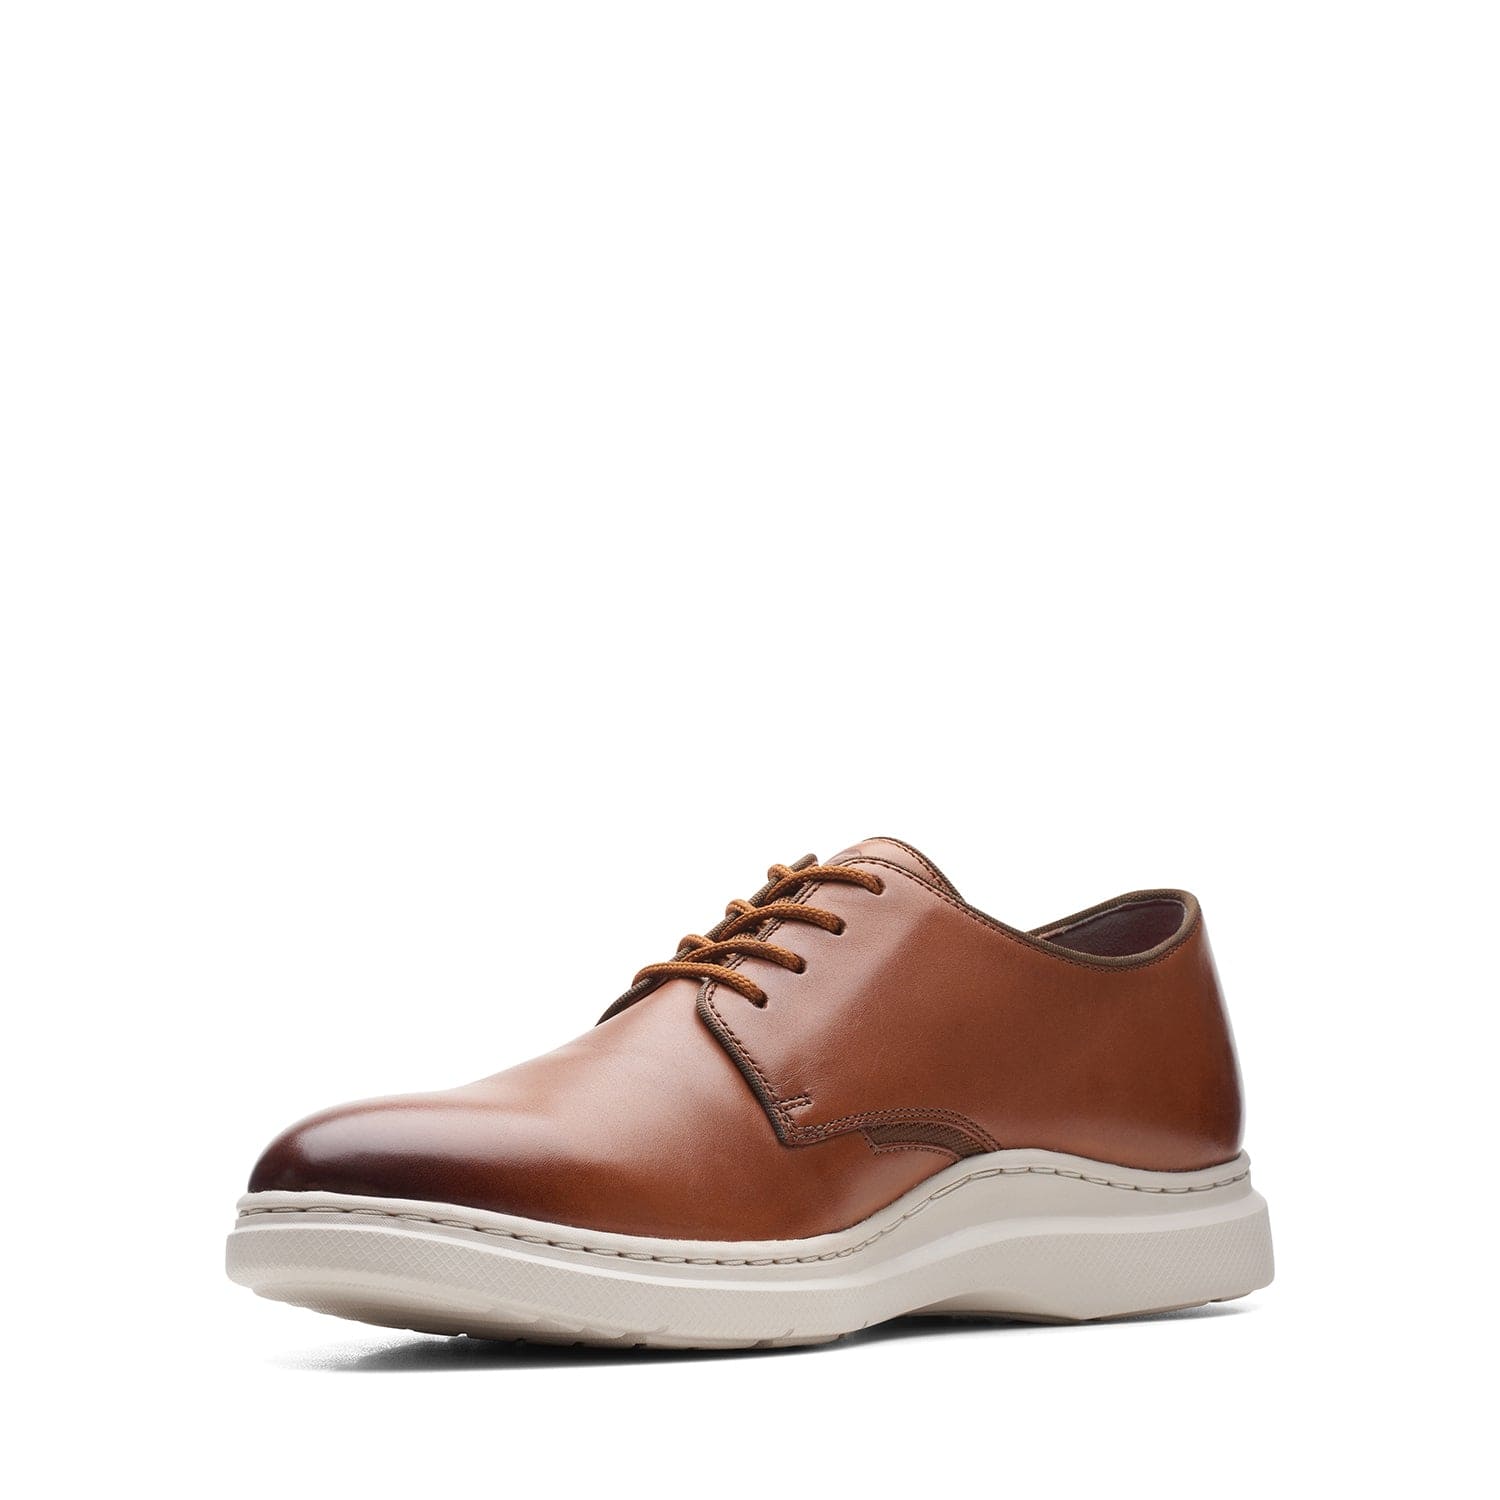 Clarks Dennet Low Shoes - Dark Tan Leather - 261629337 - G Width (Standard Fit)